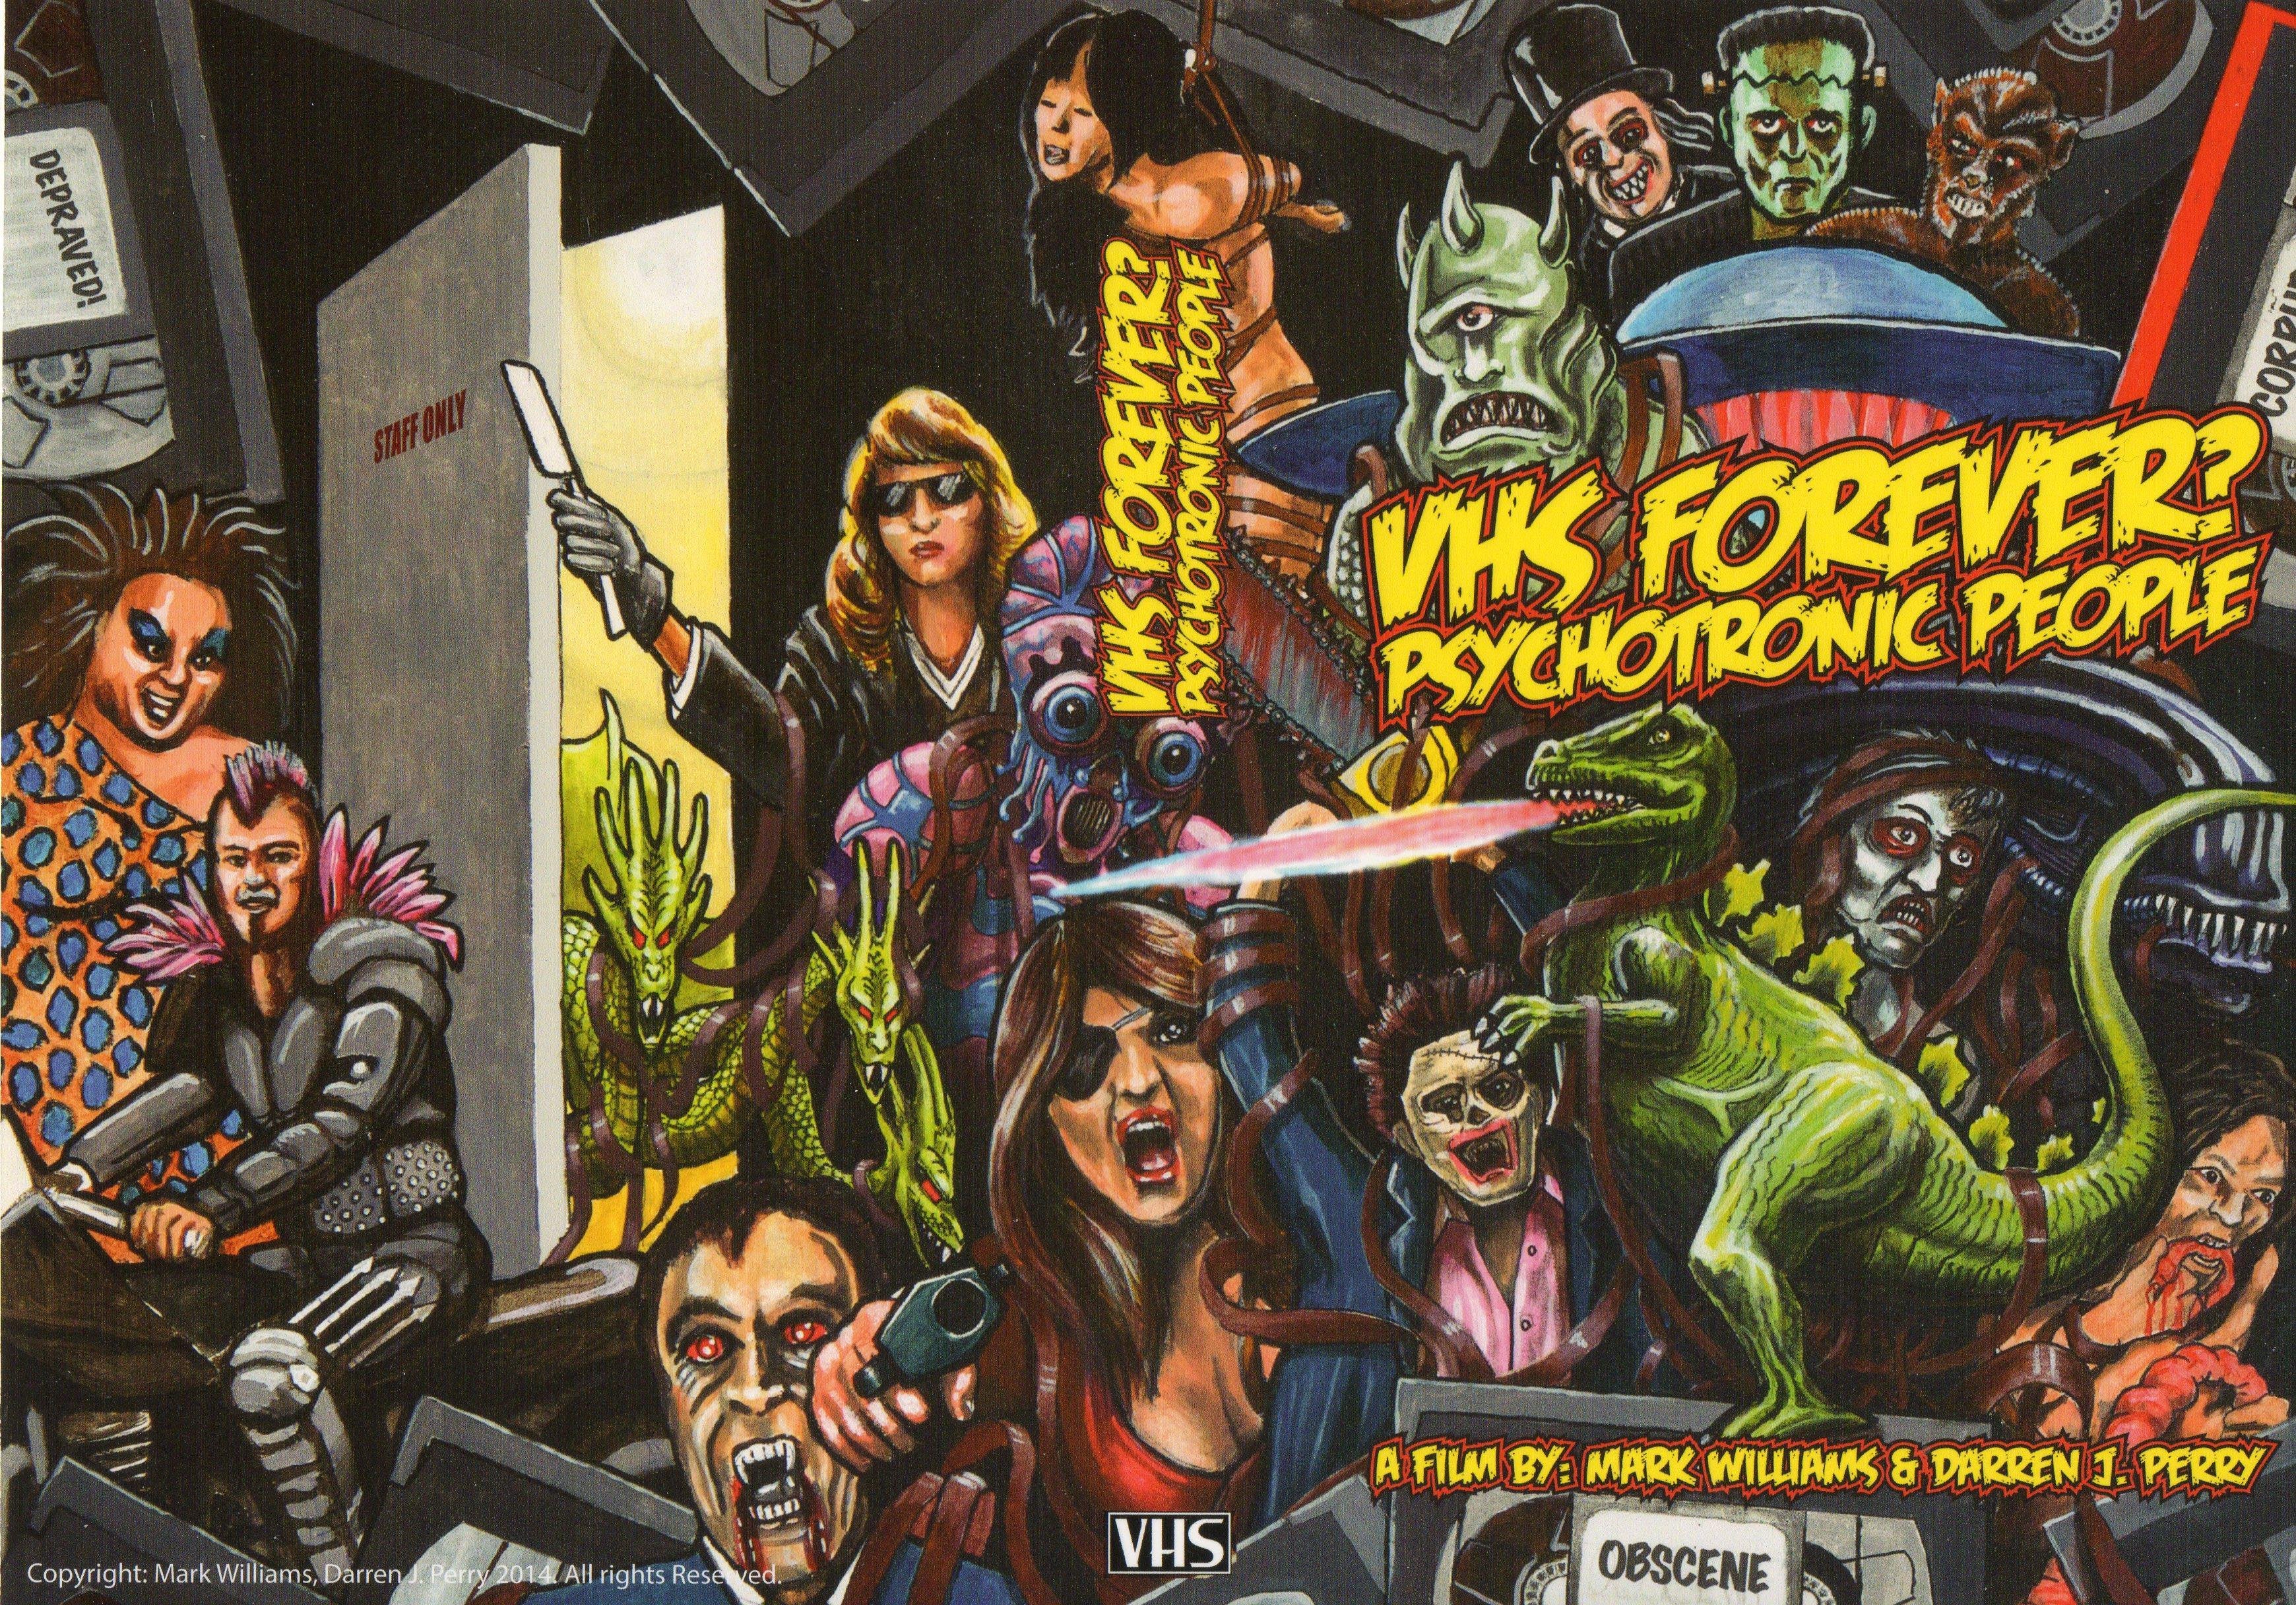 VHS Forever? Psychotronic People (2014) Screenshot 1